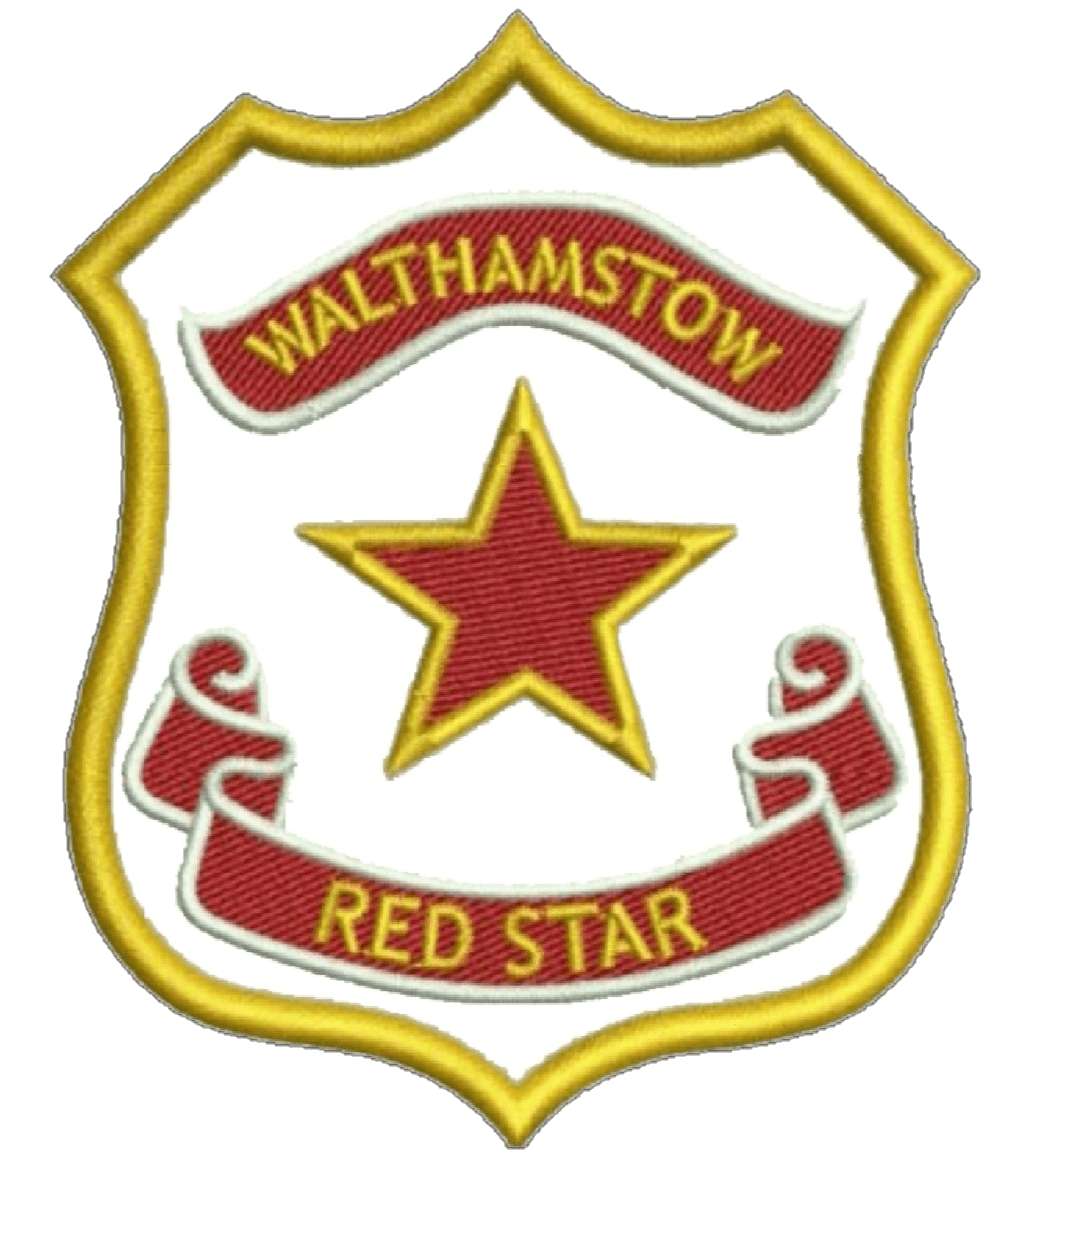 Walthamstow Rubbish Star